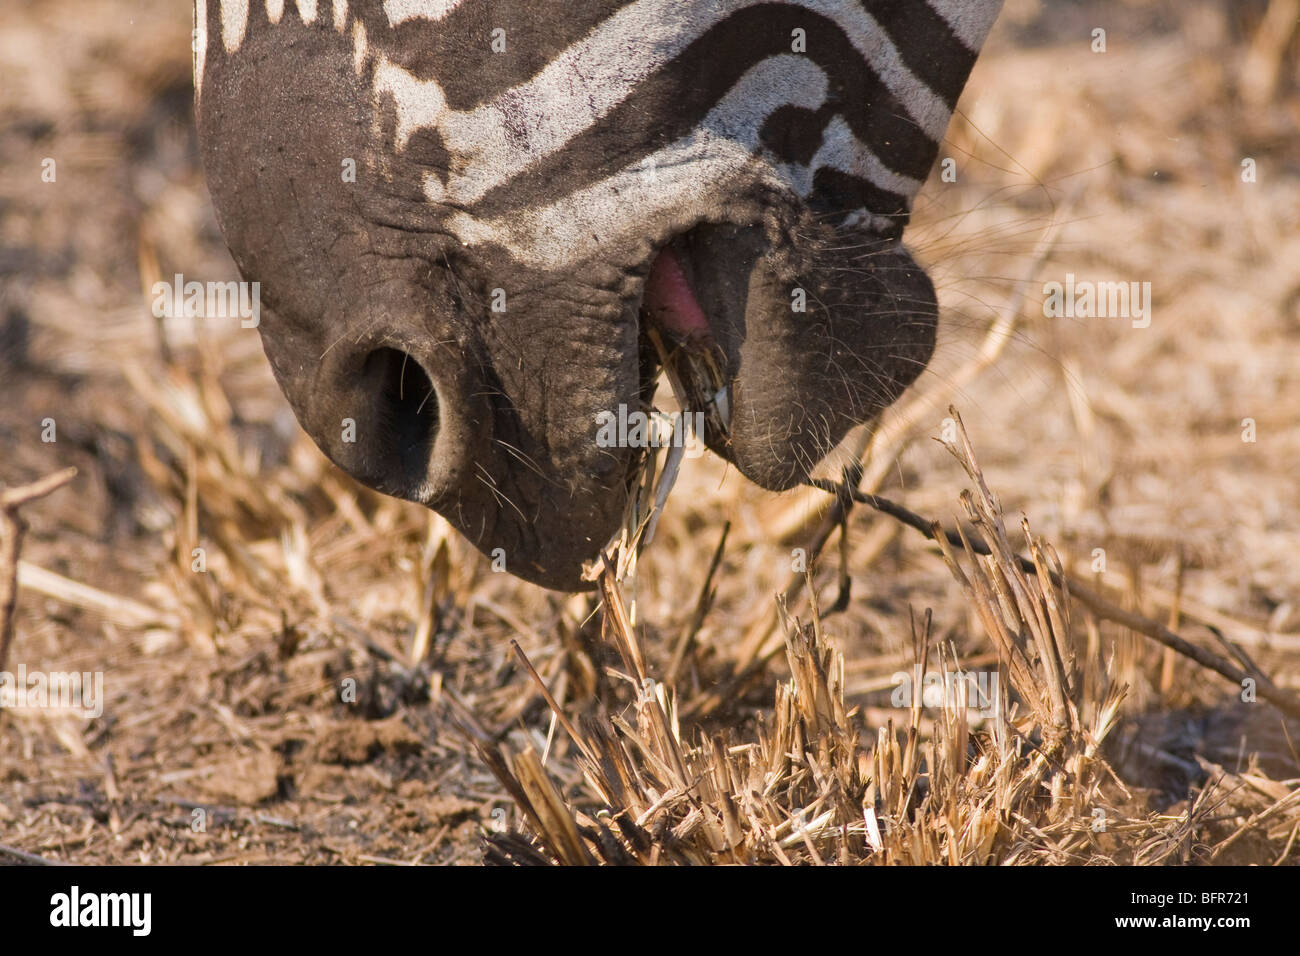 Close-up of Zebra feeding on grass Stock Photo